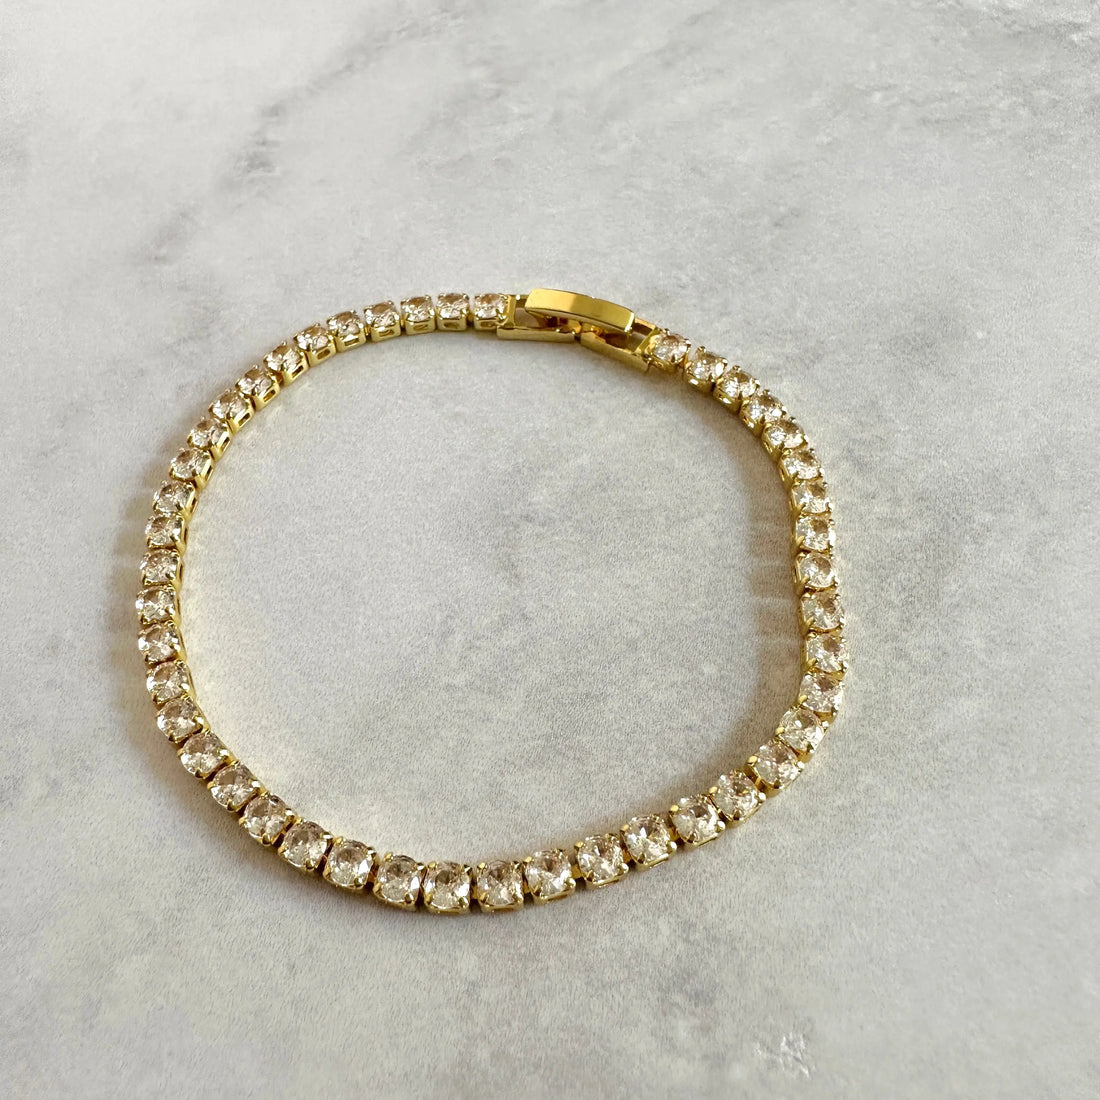 Pulsera Tennis 3mm Gold   Muun Jewelry